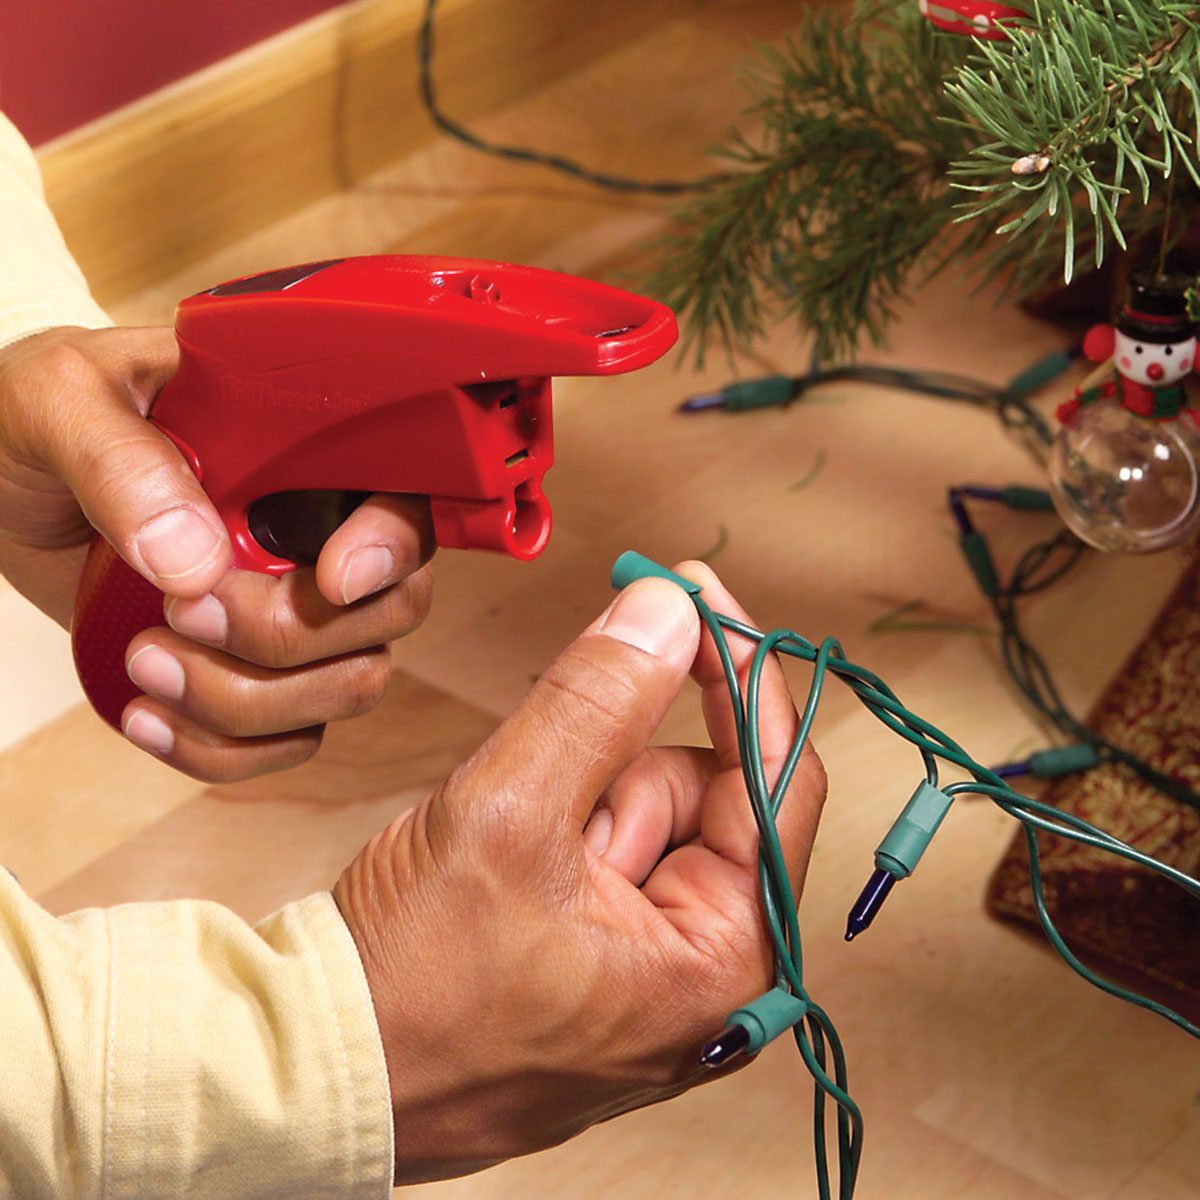 LED Keeper, LED Christmas Light Repair Tool